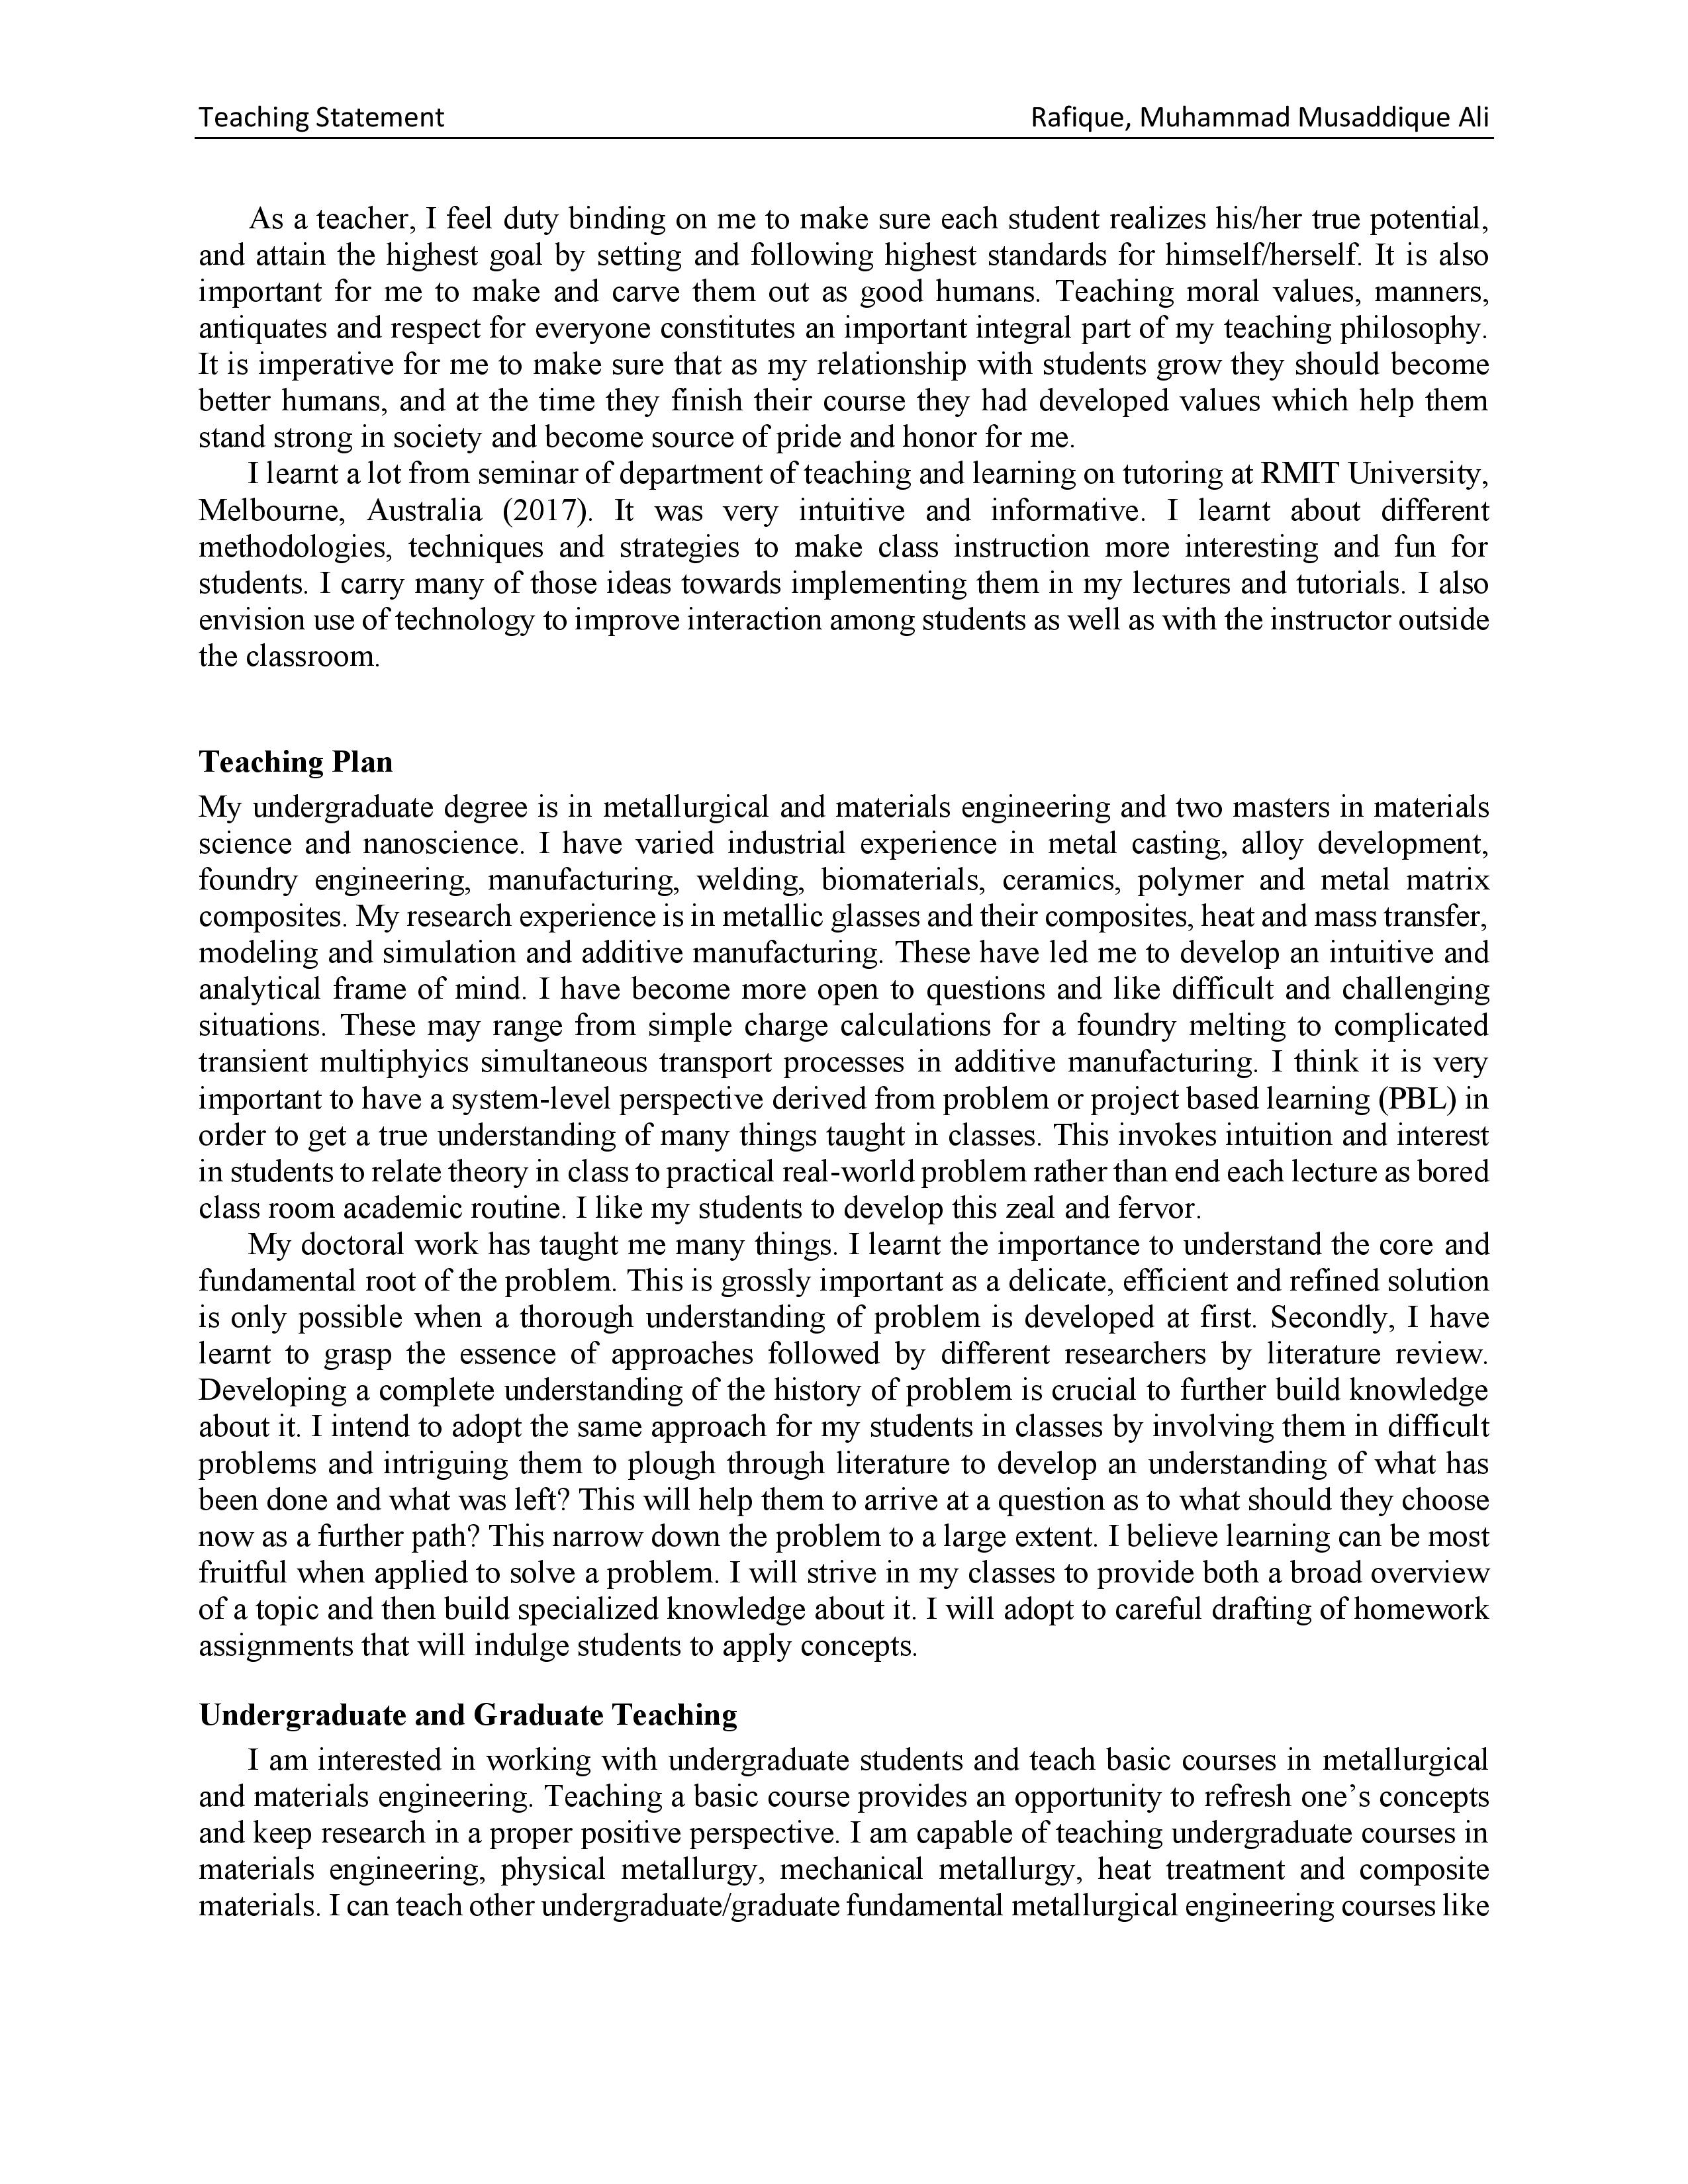 Teaching statement_rev_1-0-page-002